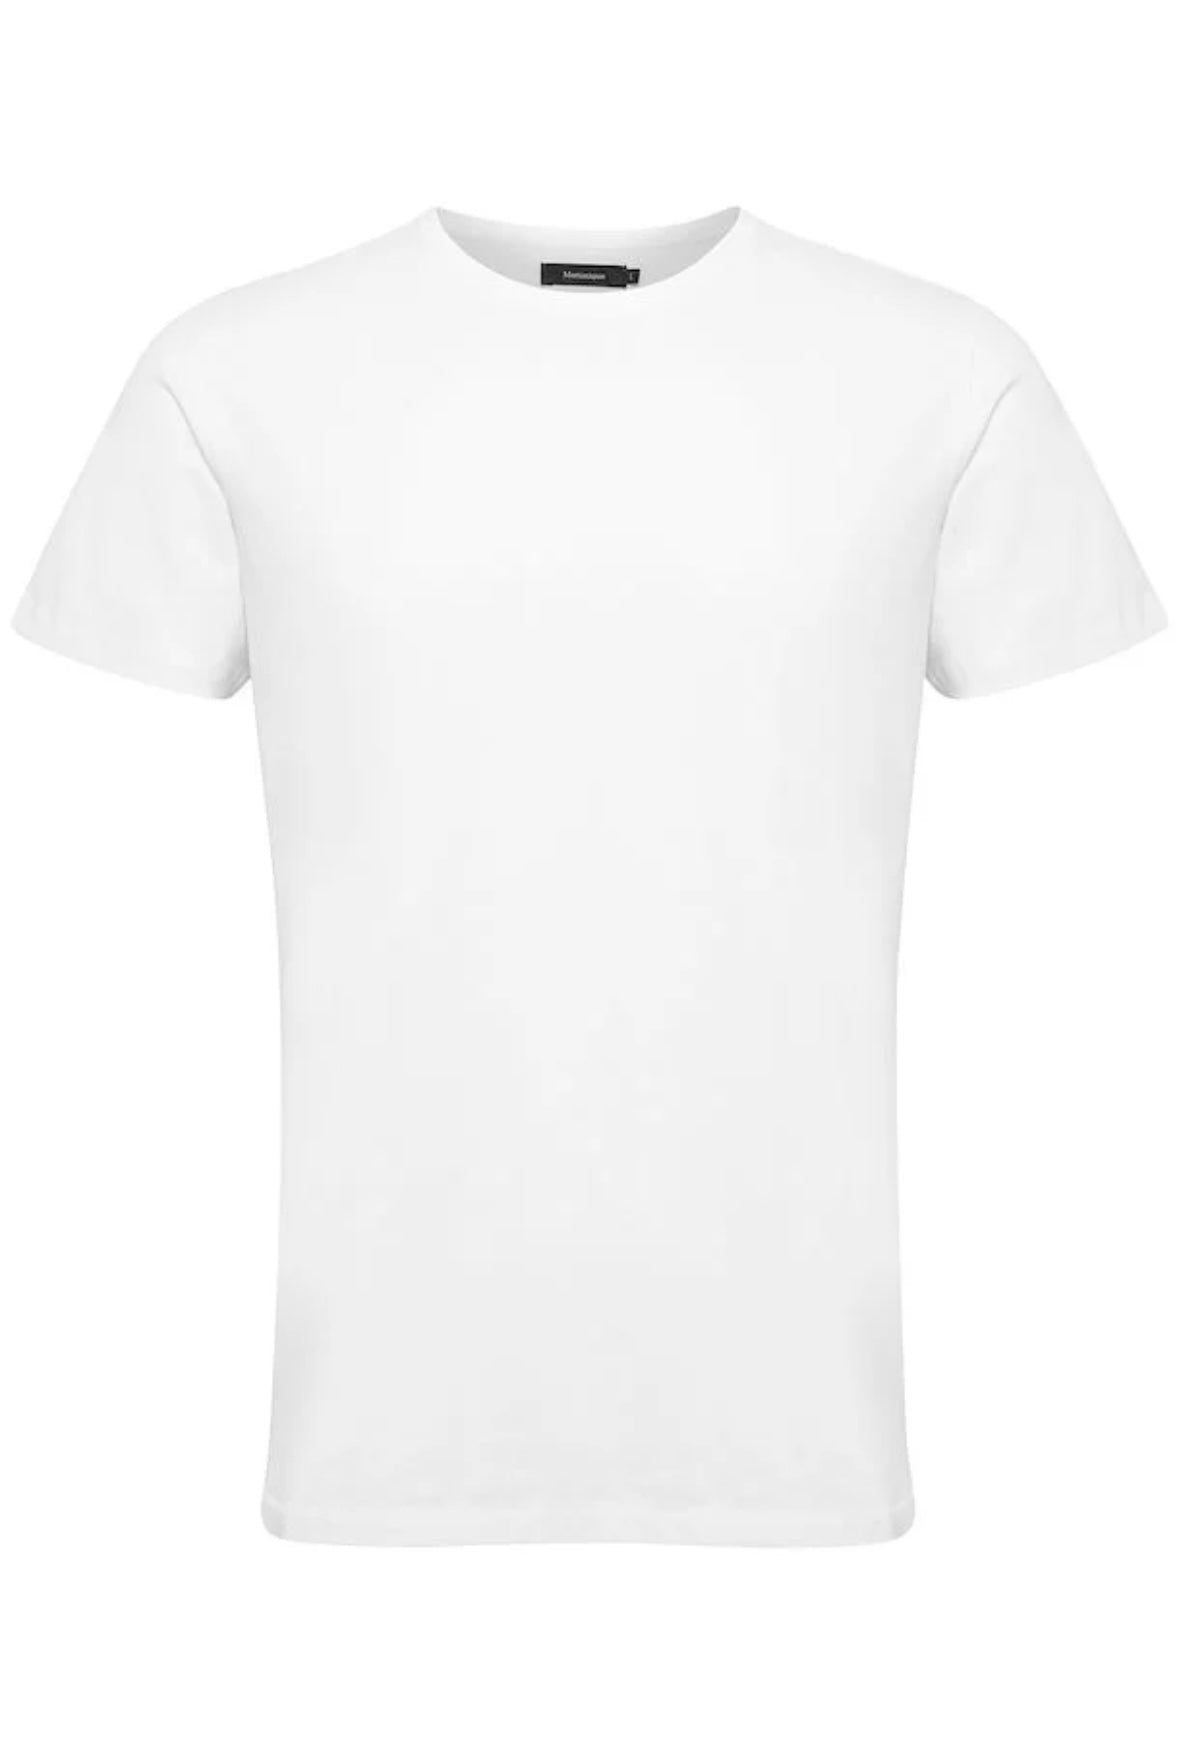 Matinique Jermalink Cotton Stretch t-shirt - White